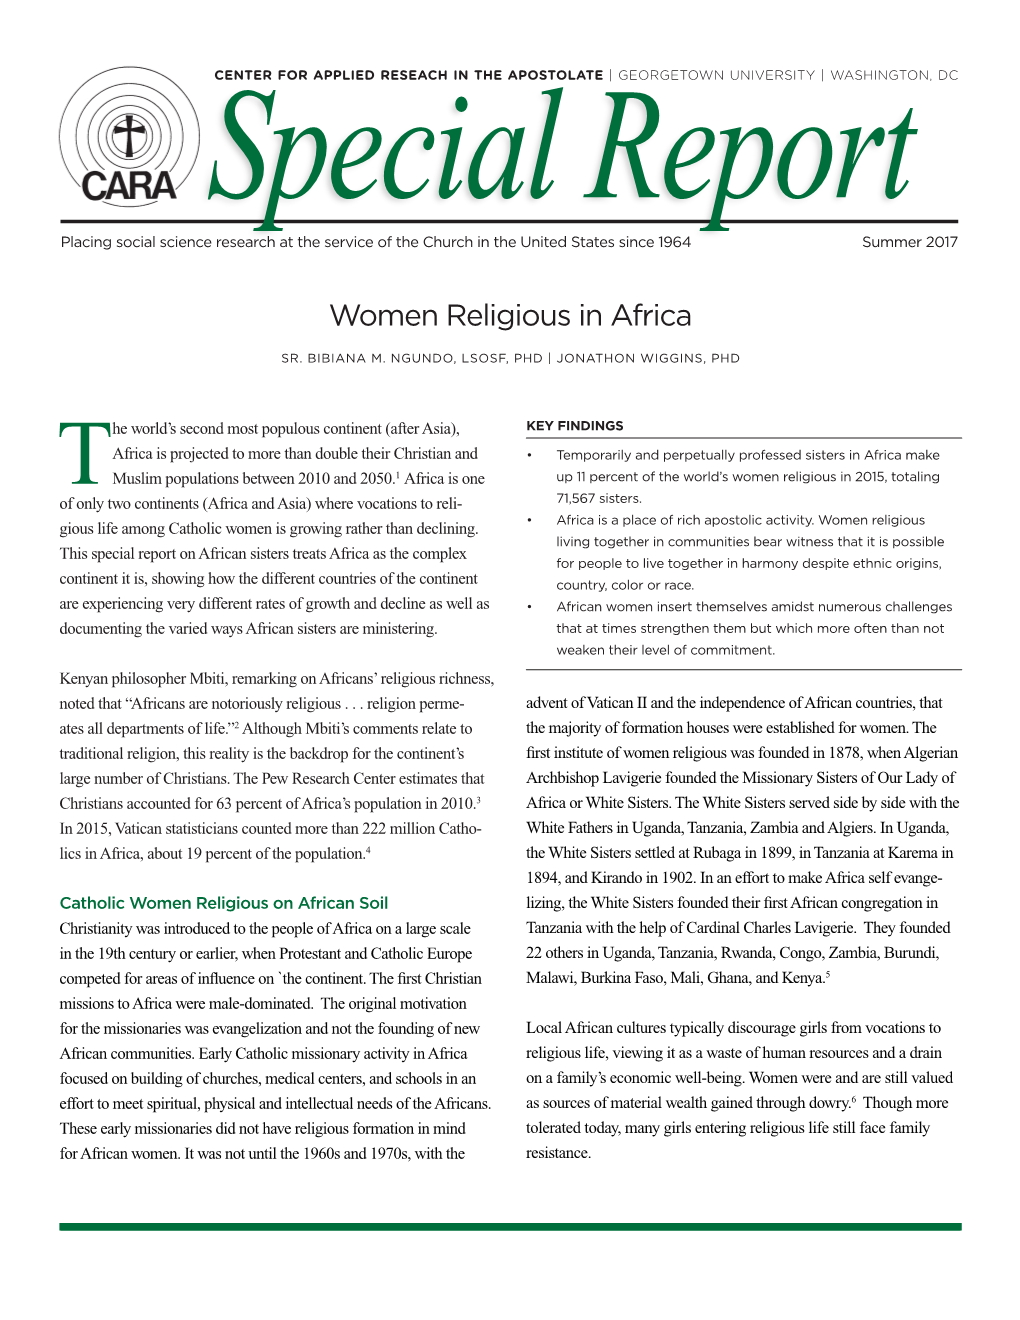 Women Religious in Africa